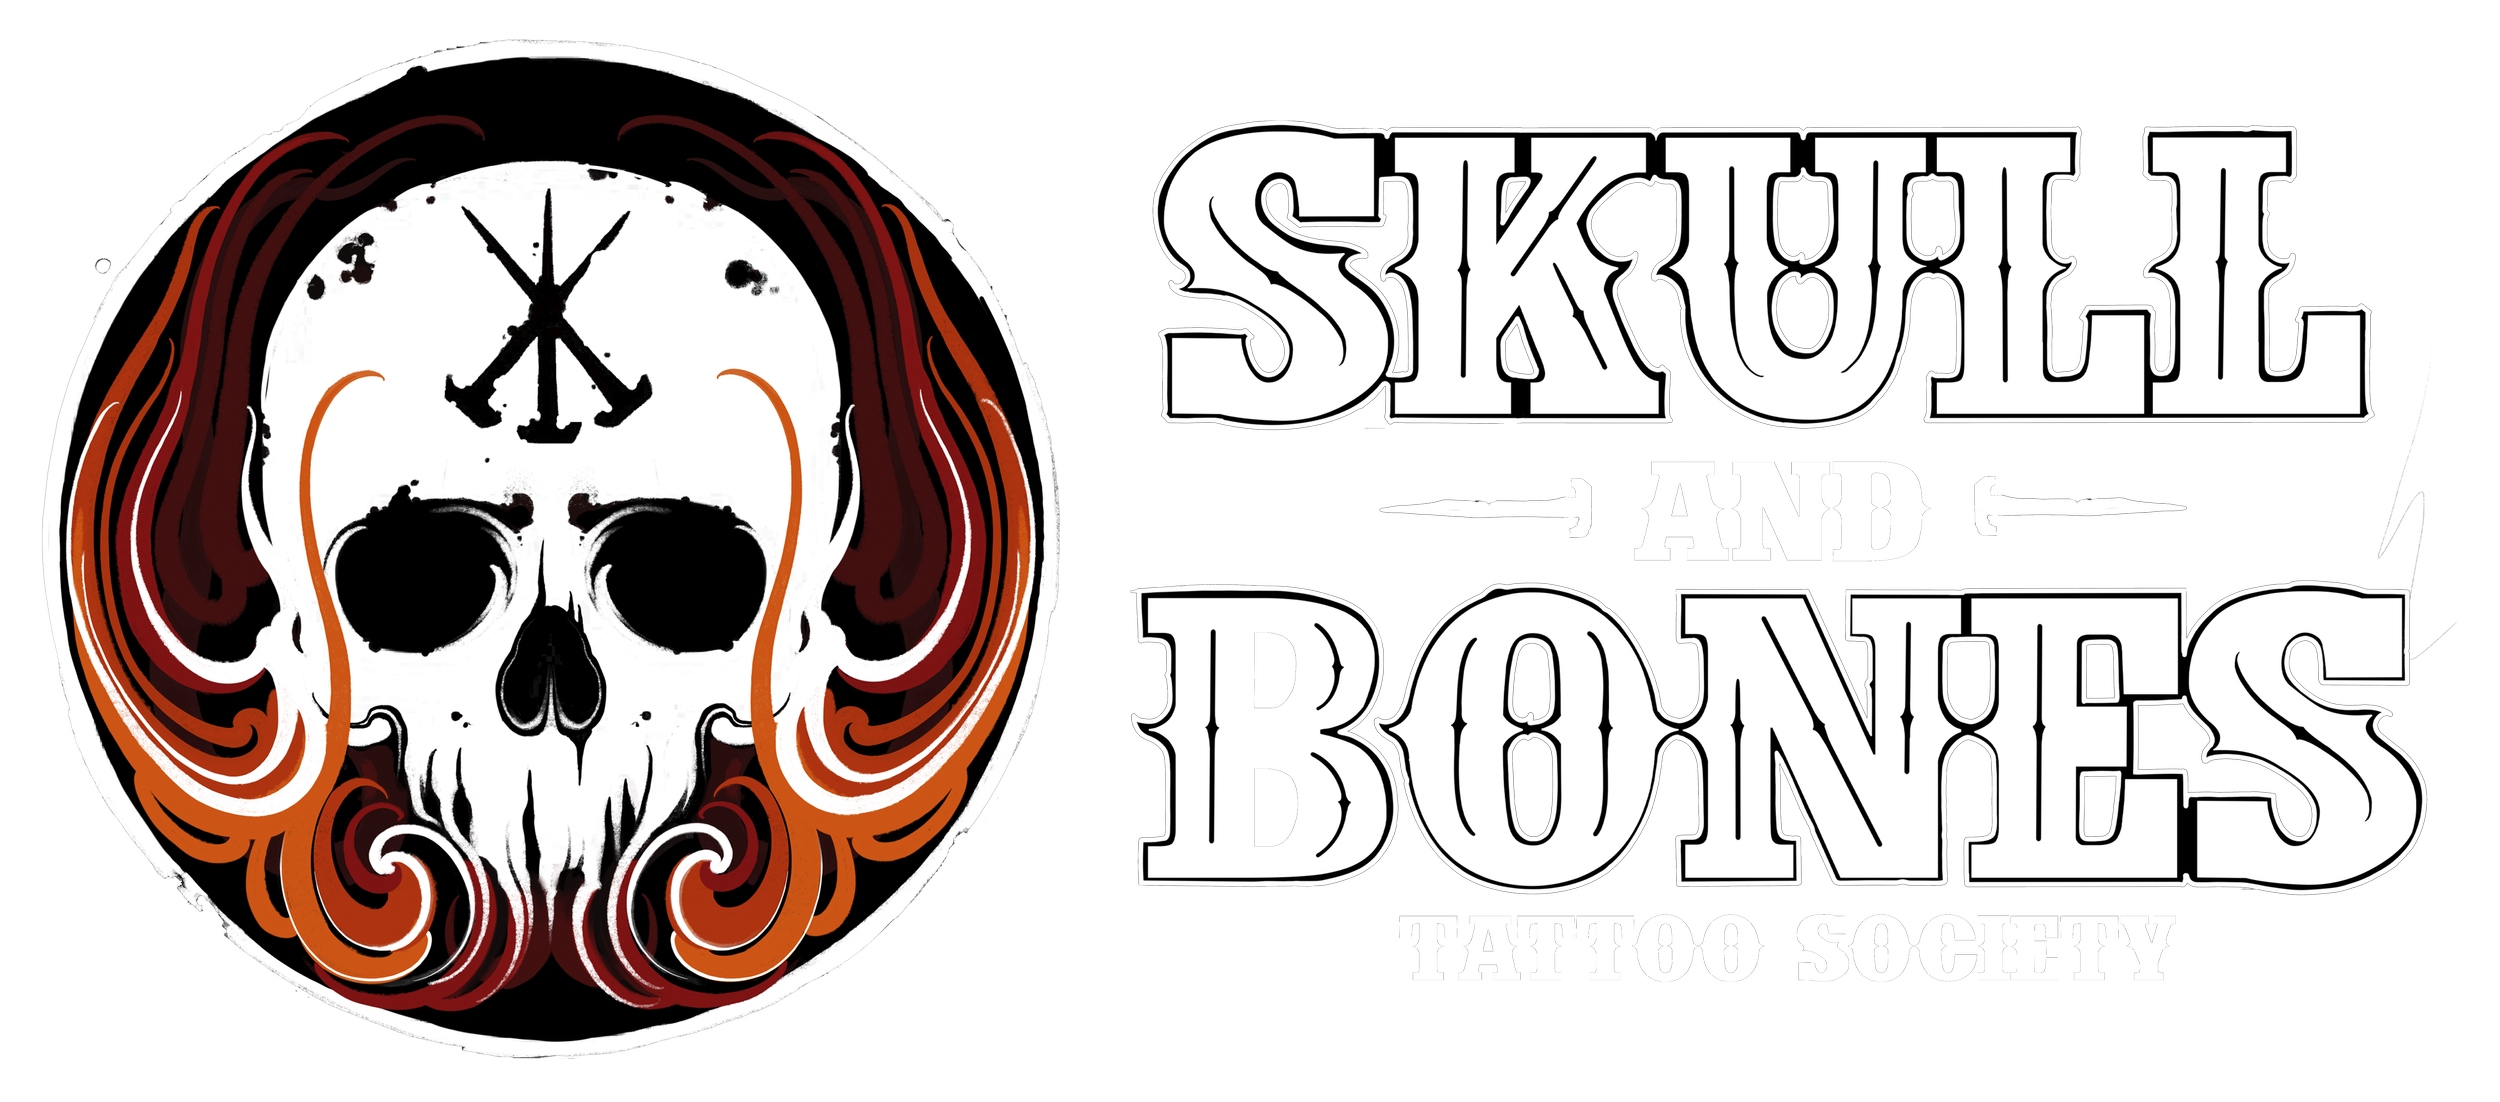 Skull and Bones 